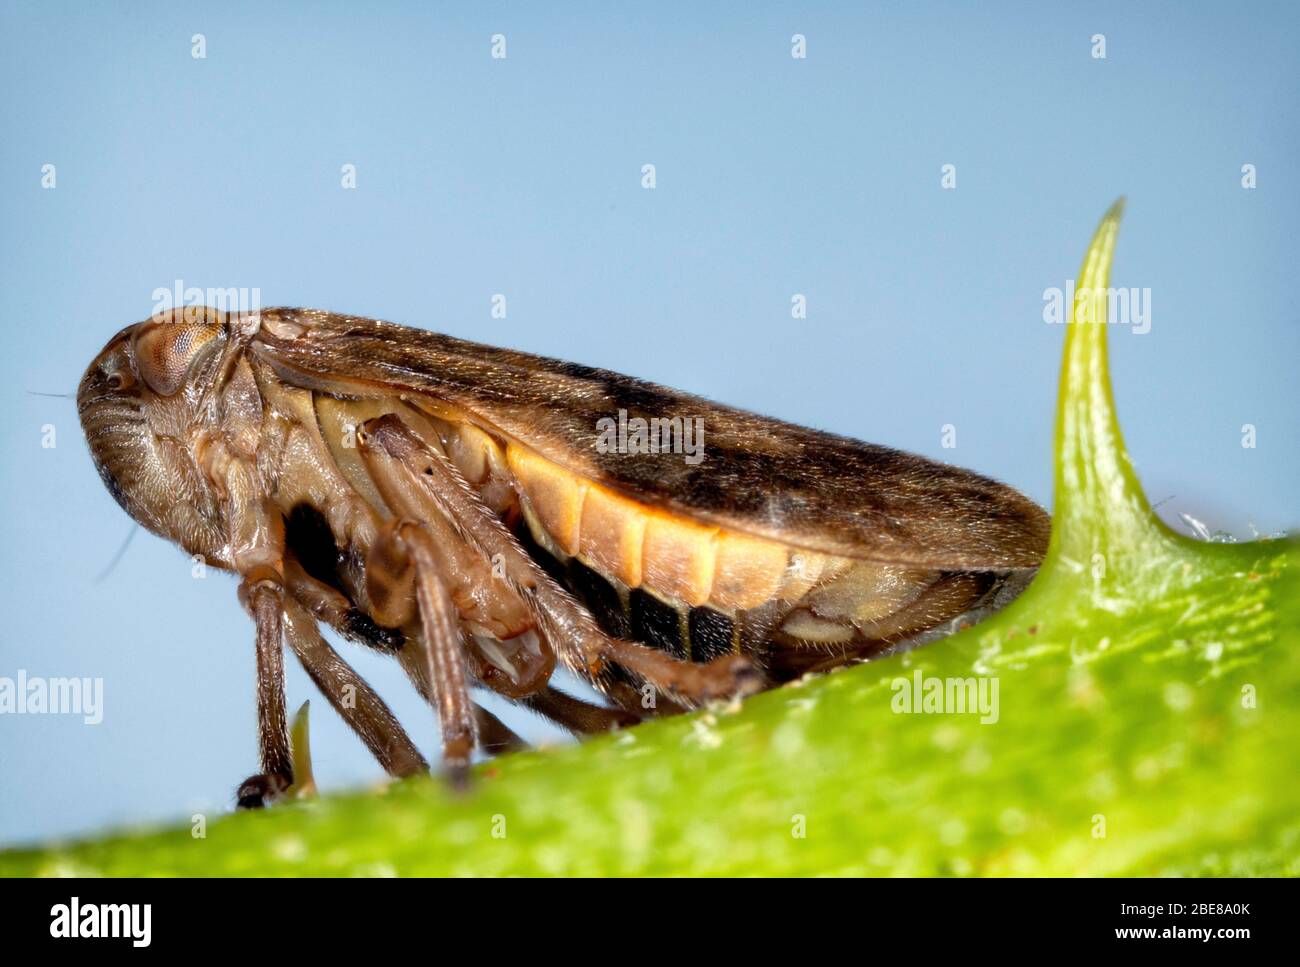 Adult spittle bug on a bramble stem Stock Photo